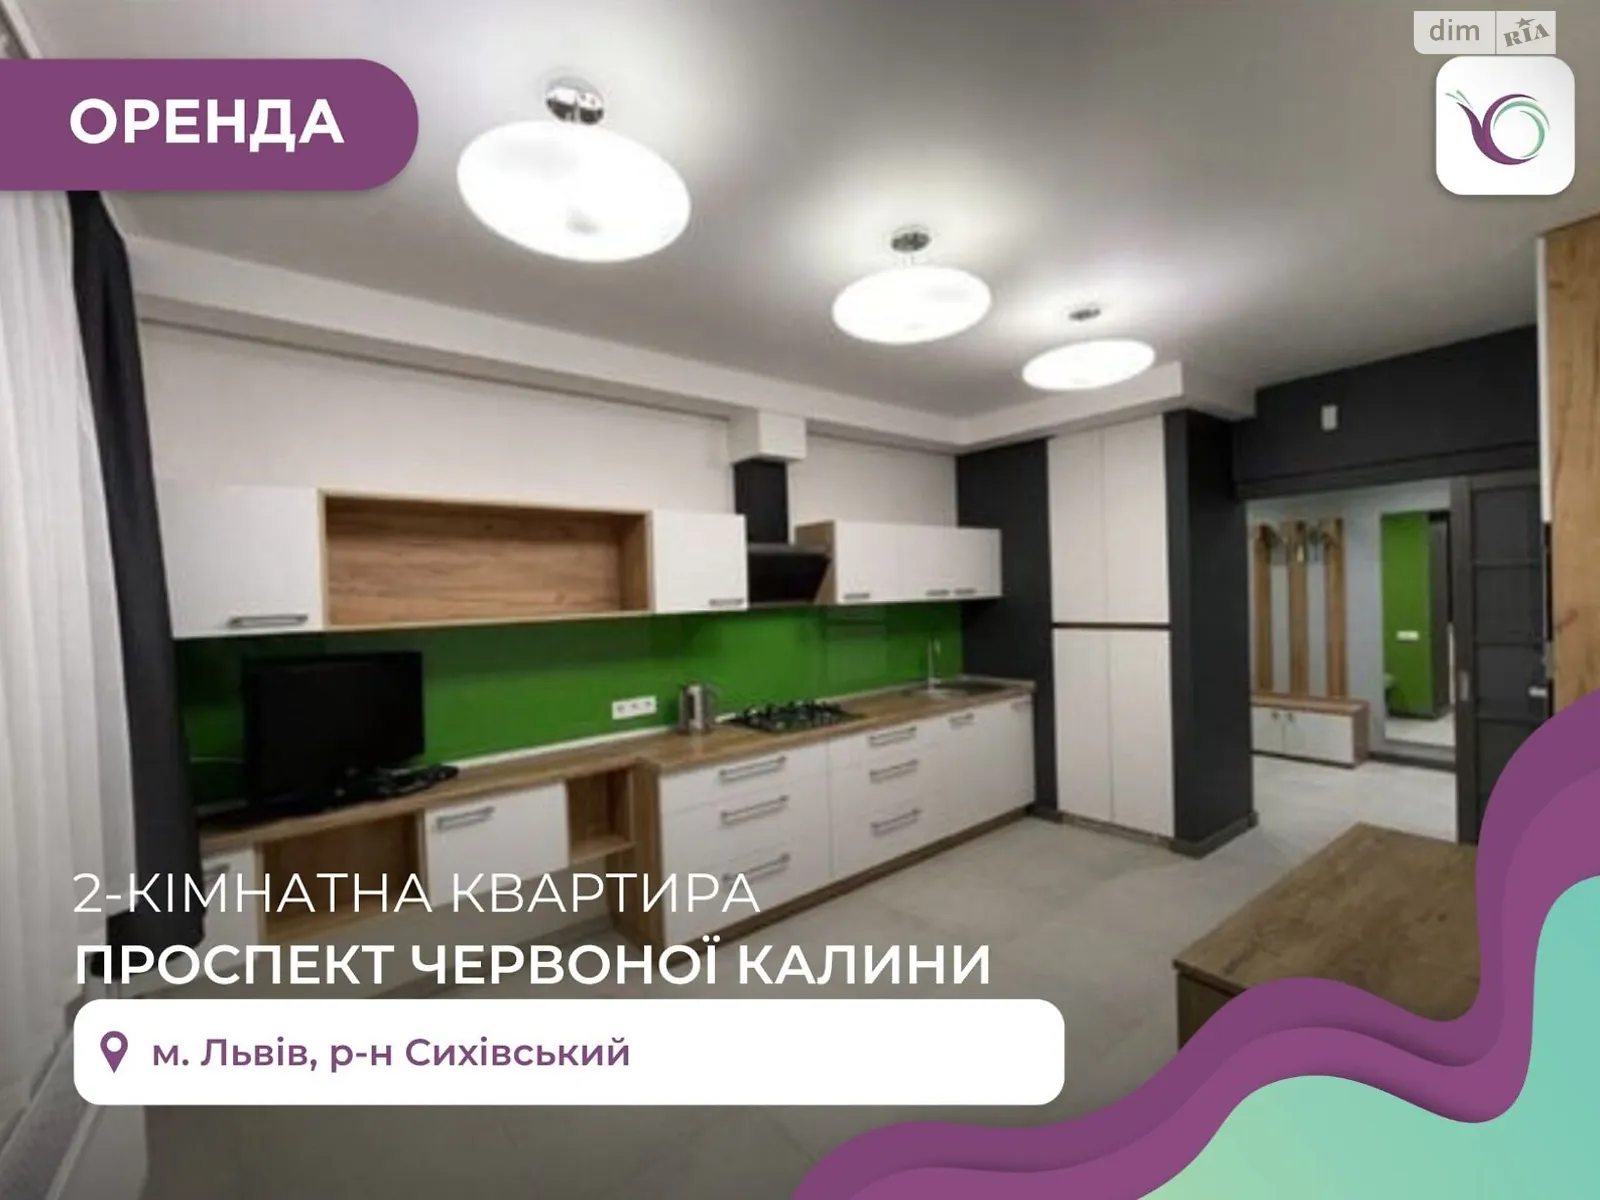 Сдается в аренду 2-комнатная квартира 64 кв. м в Львове, цена: 600 $ - фото 1